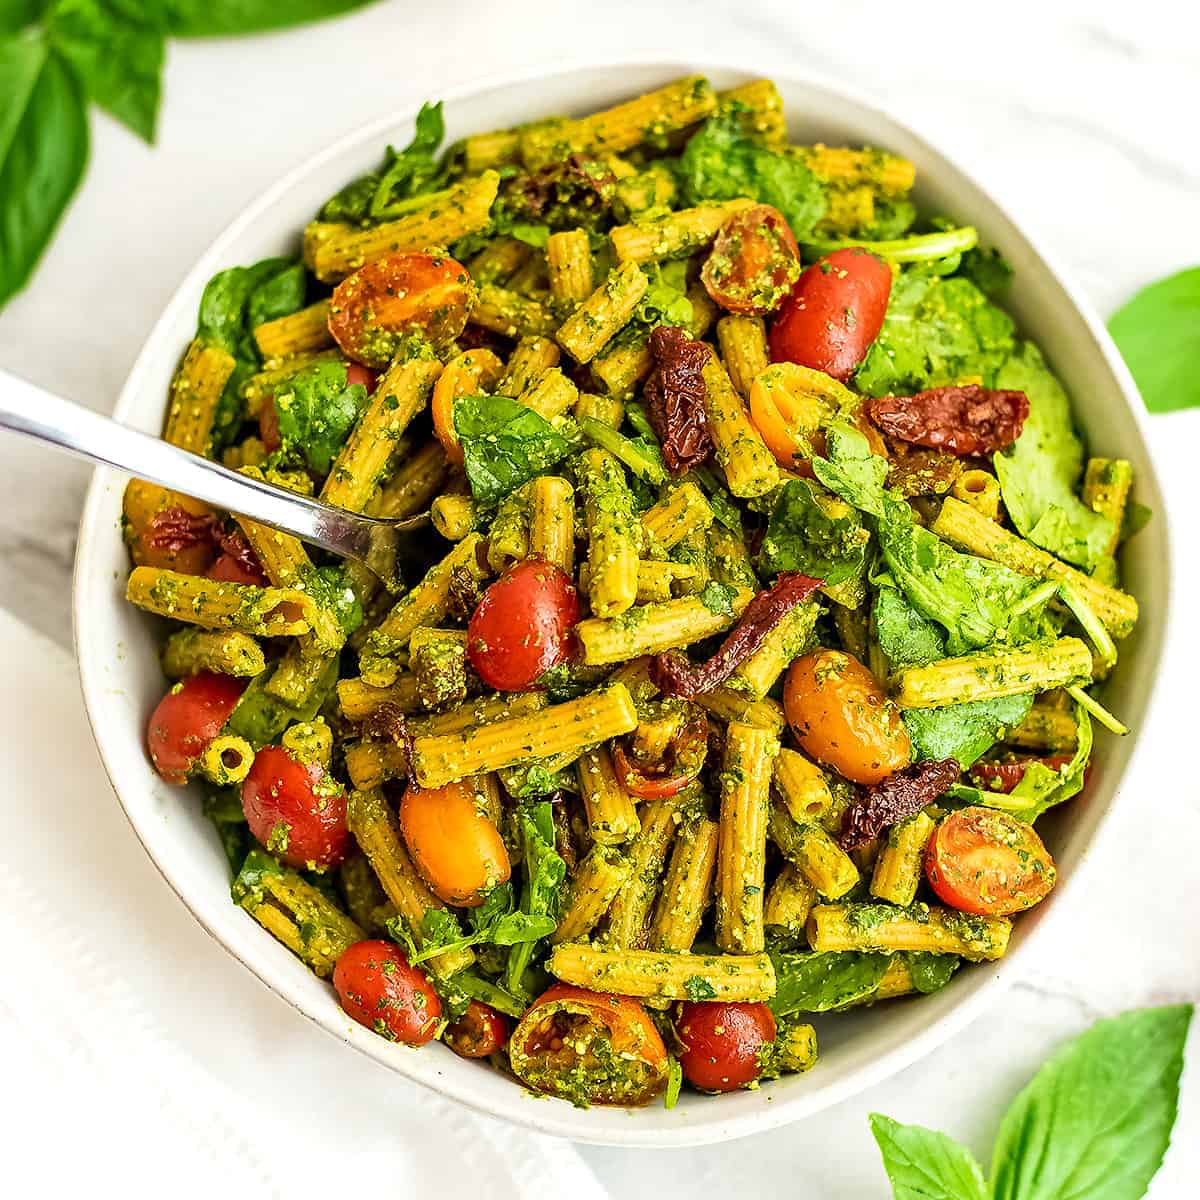 Pesto Pasta Salad With Sun Dried Tomatoes | Bites of Wellness